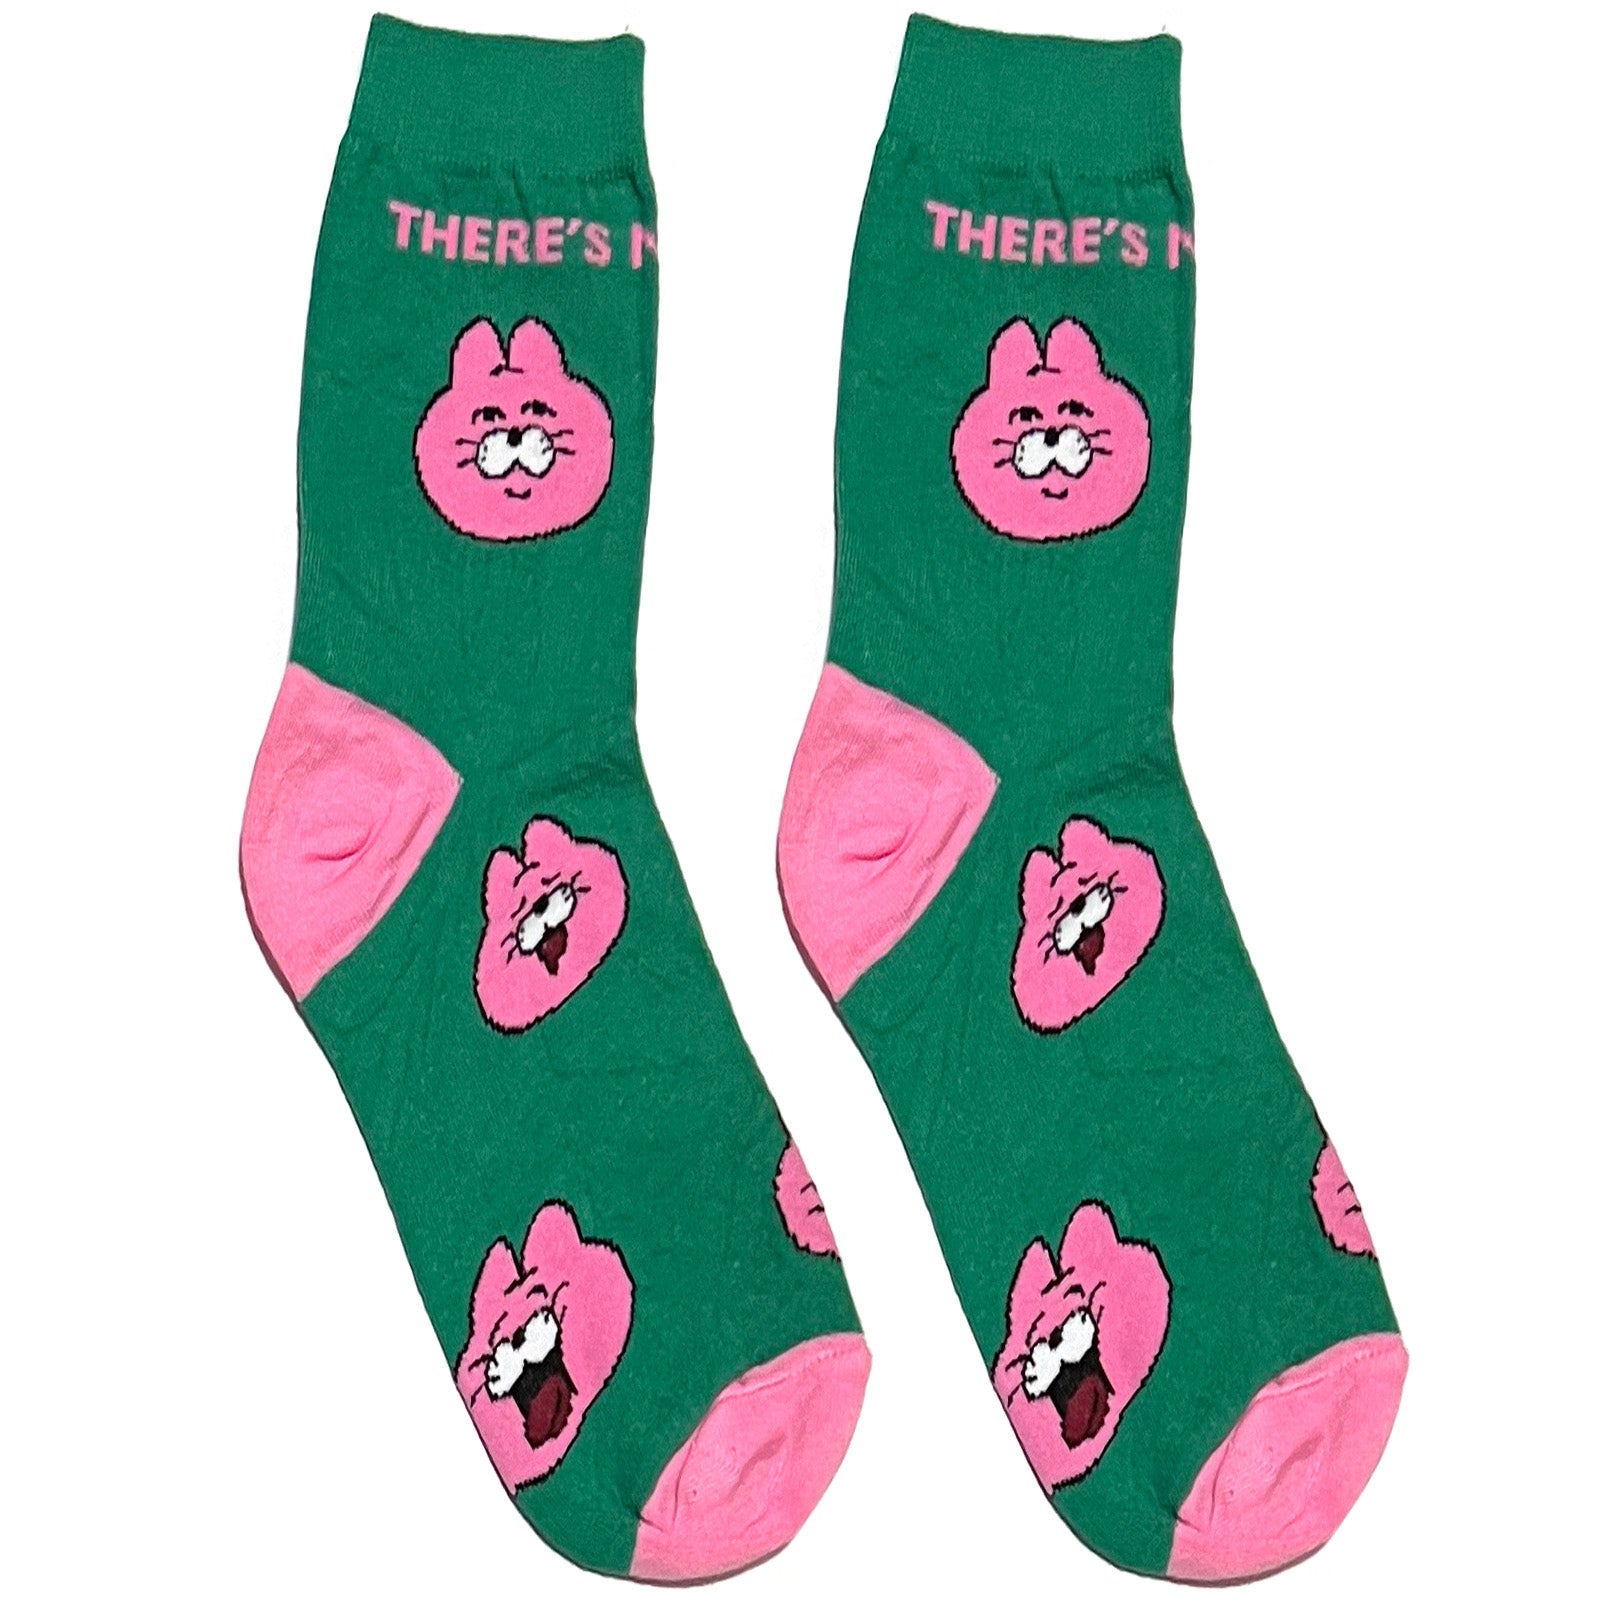 Green And Pink Rabbit Short Crew Socks